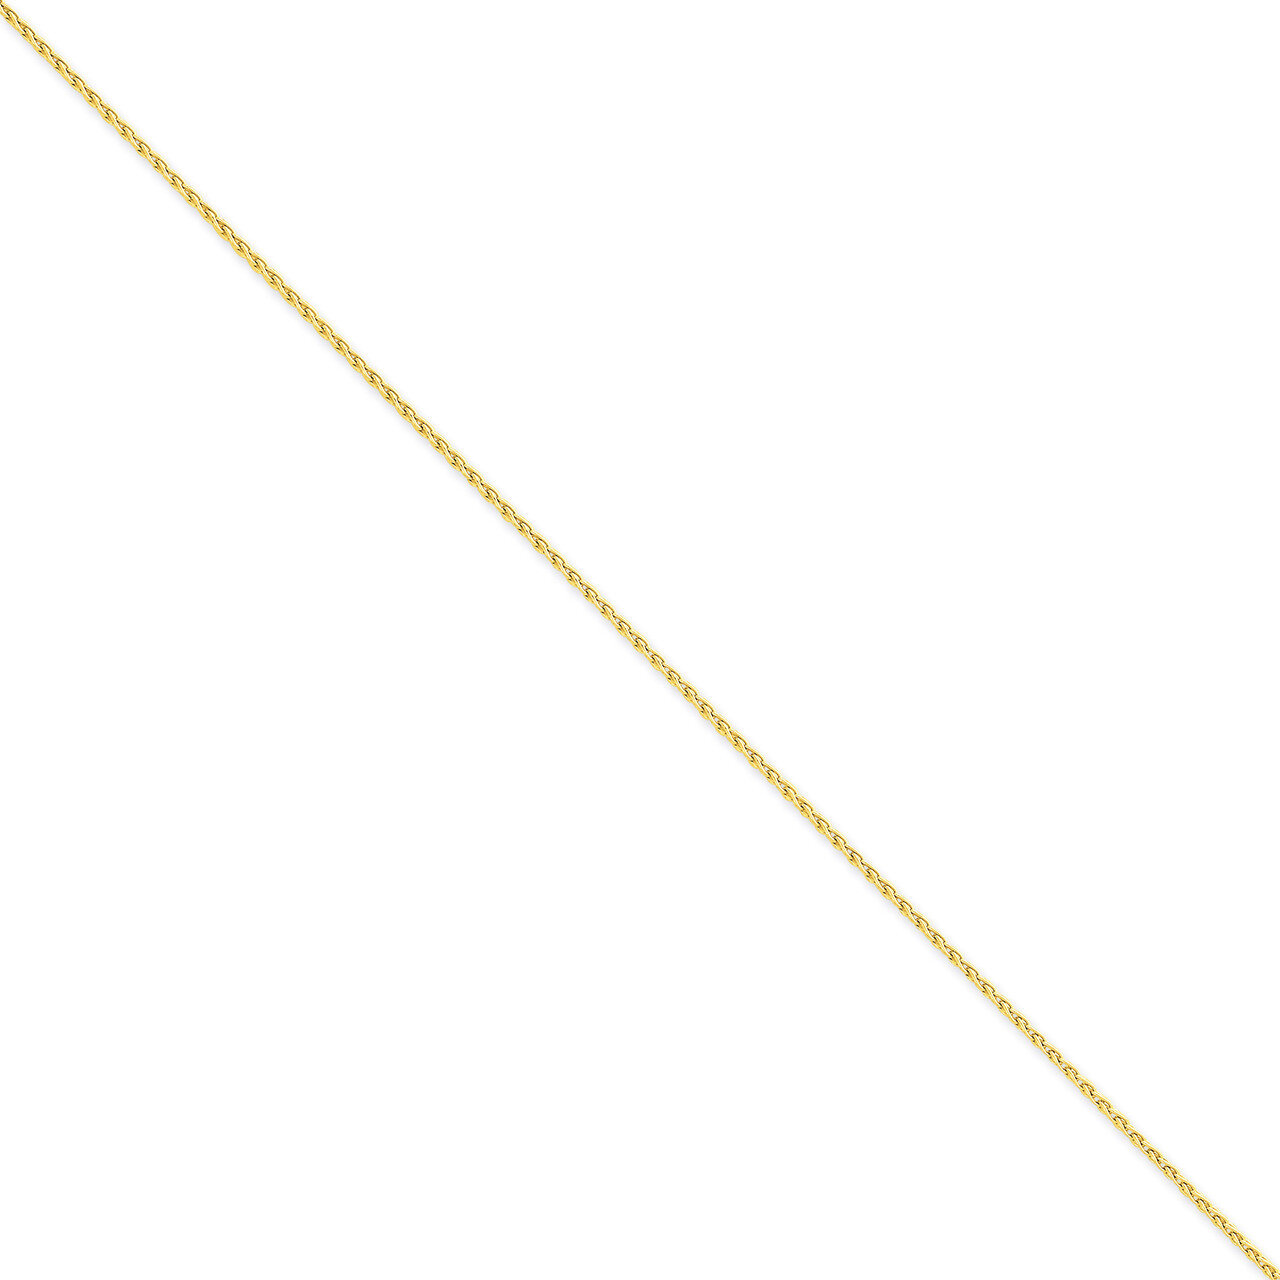 1.5 mm Parisian Wheat Chain 9 Inch 14k Gold PEN266-9